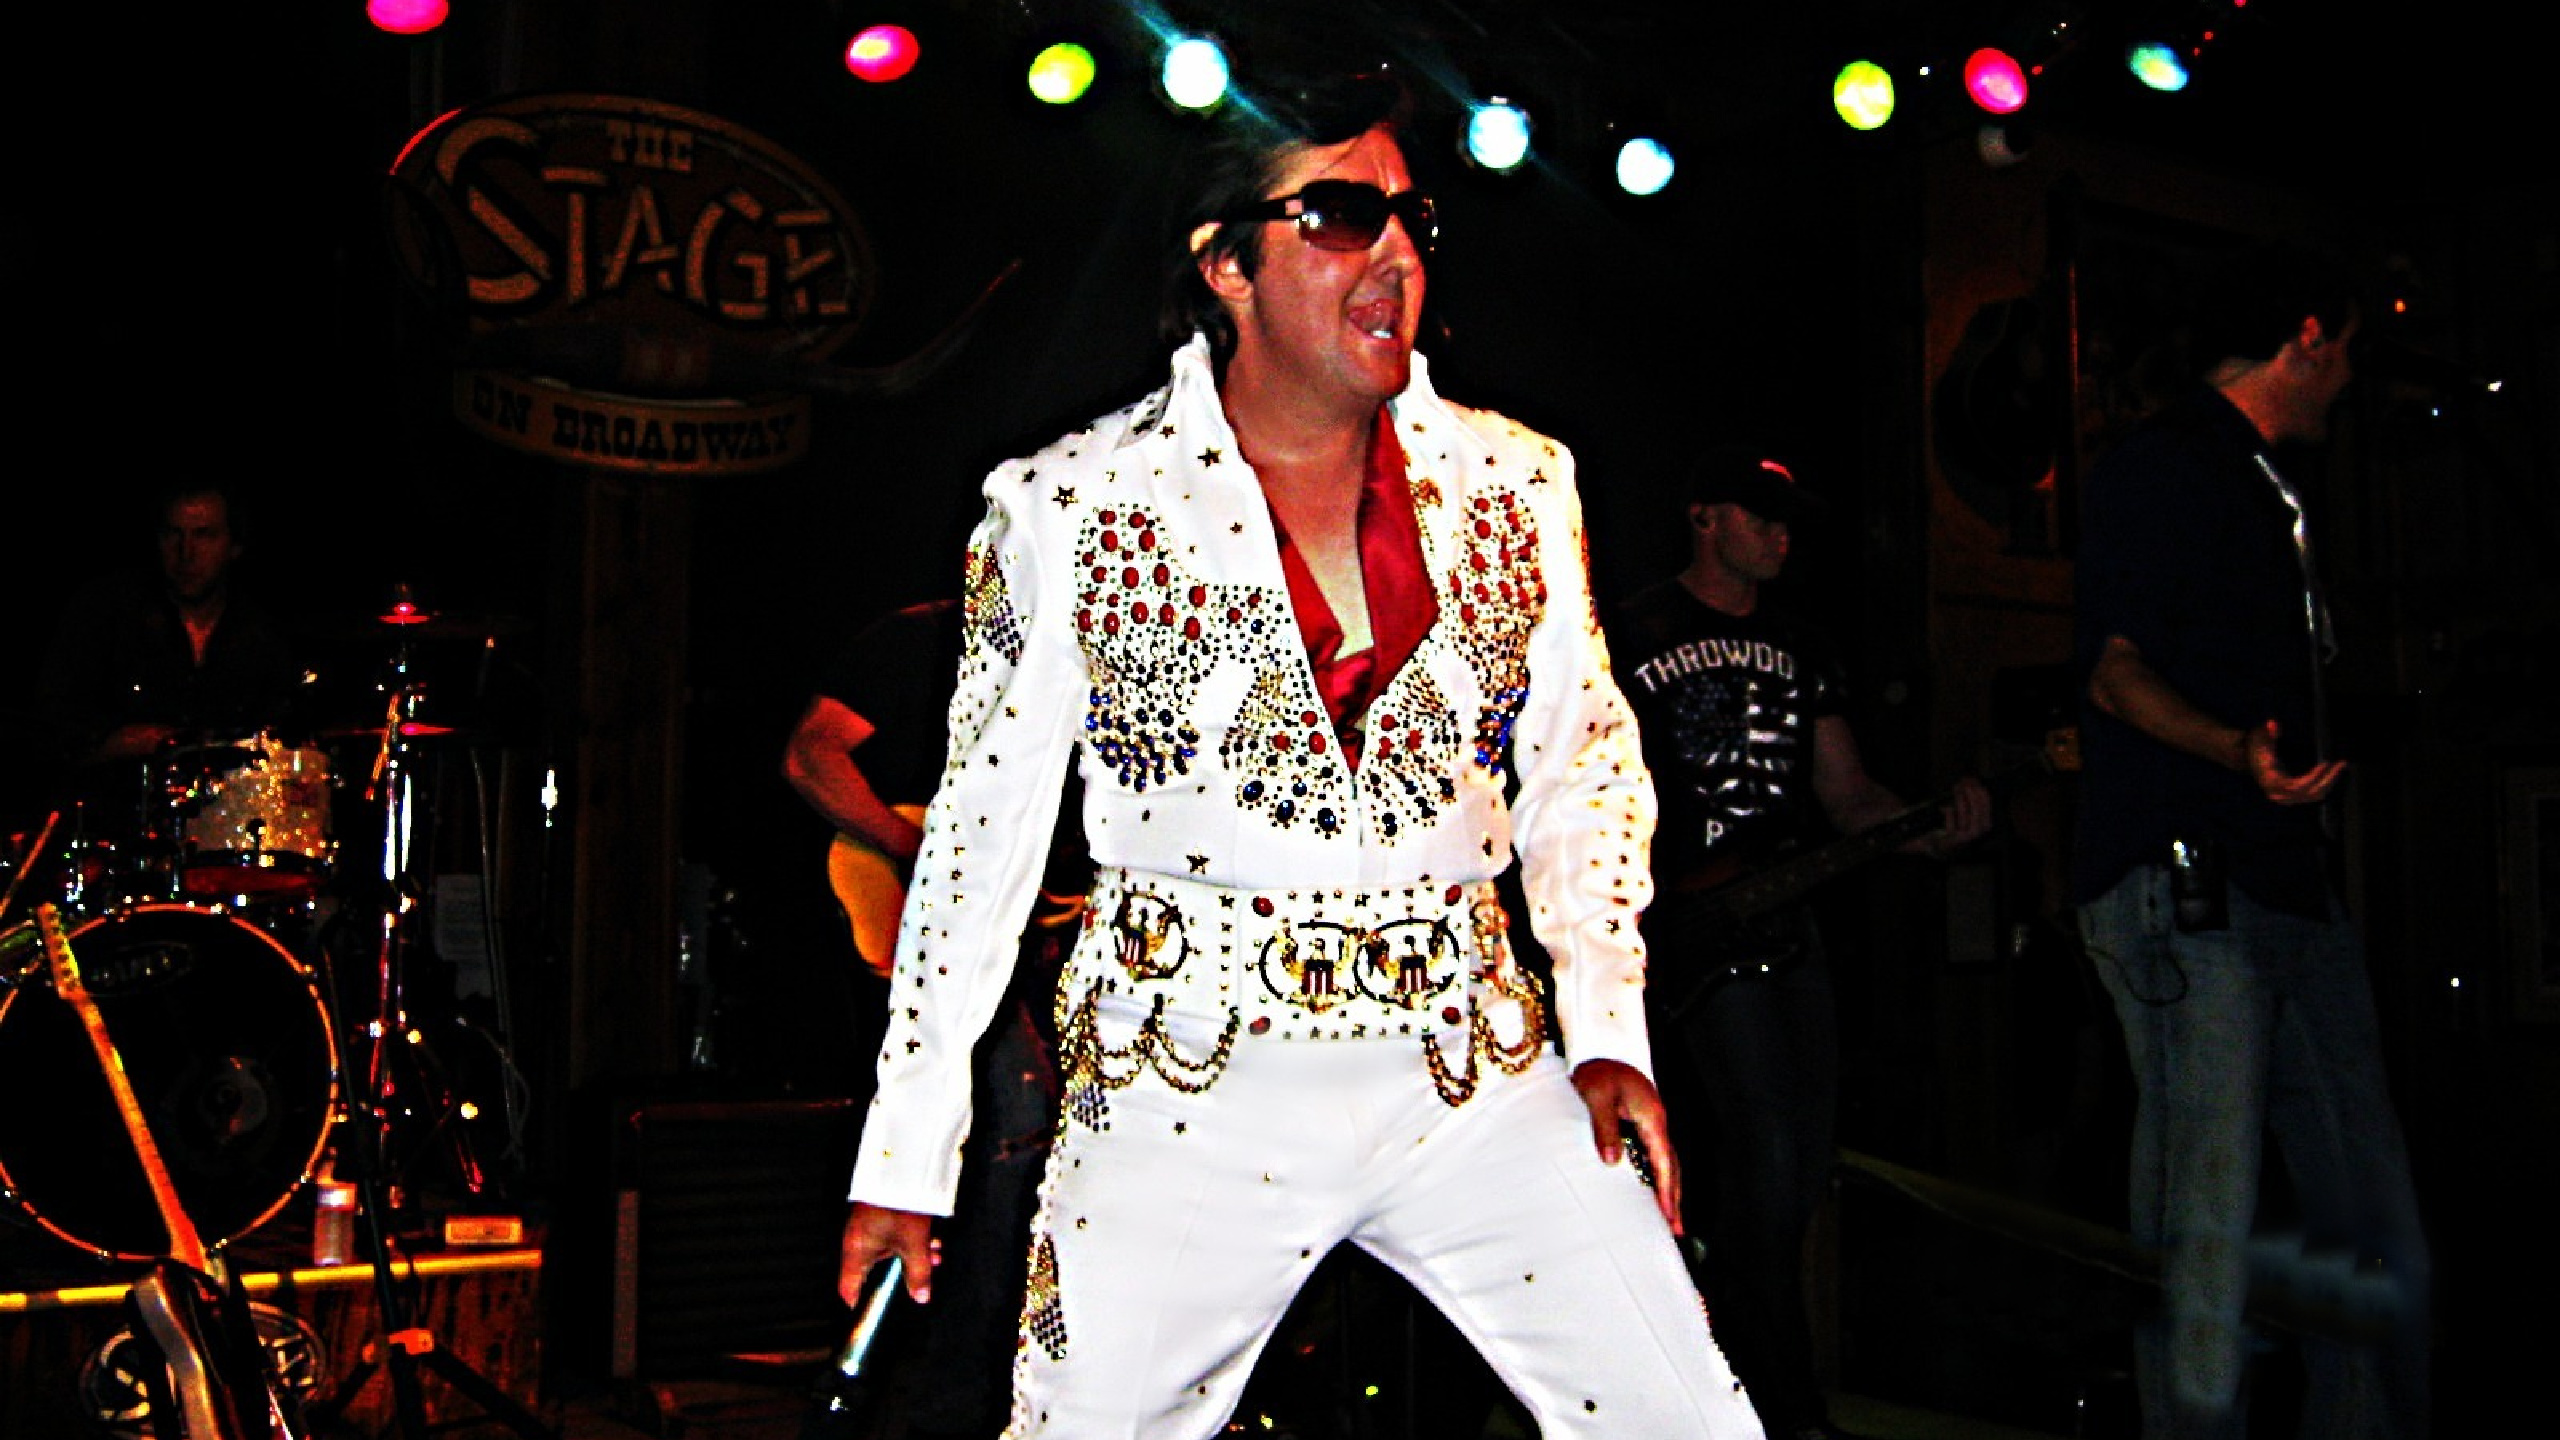 Nashville Elvis Impersonator Chuck Baril The Stage